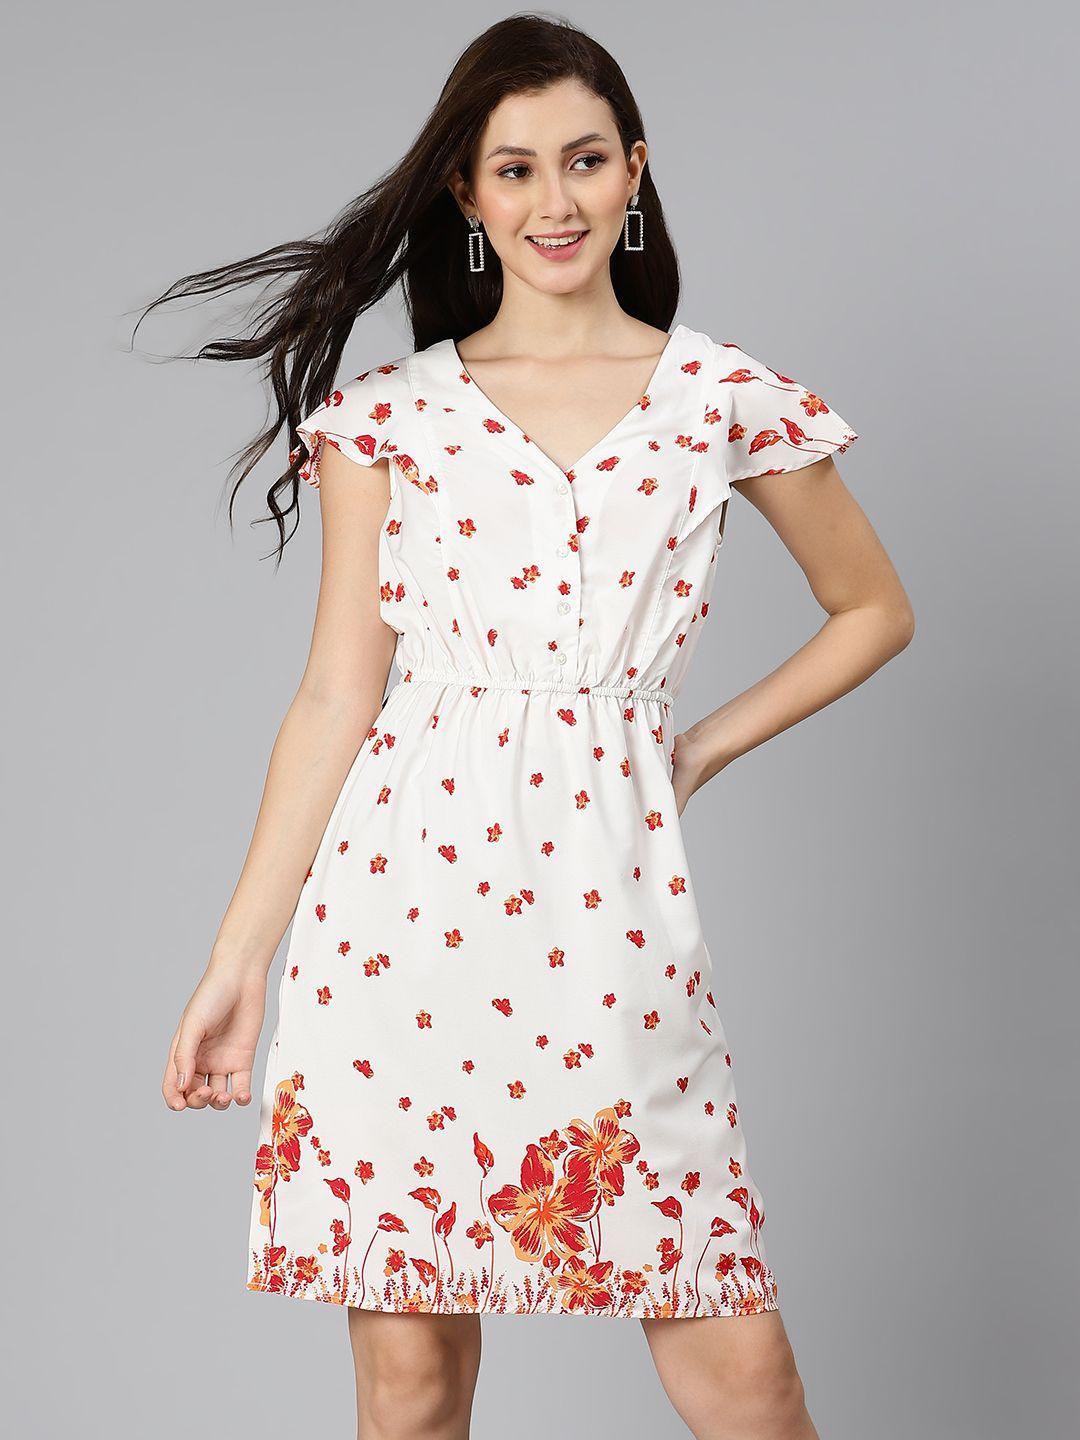 oxolloxo white & red floral v-neck satin dress